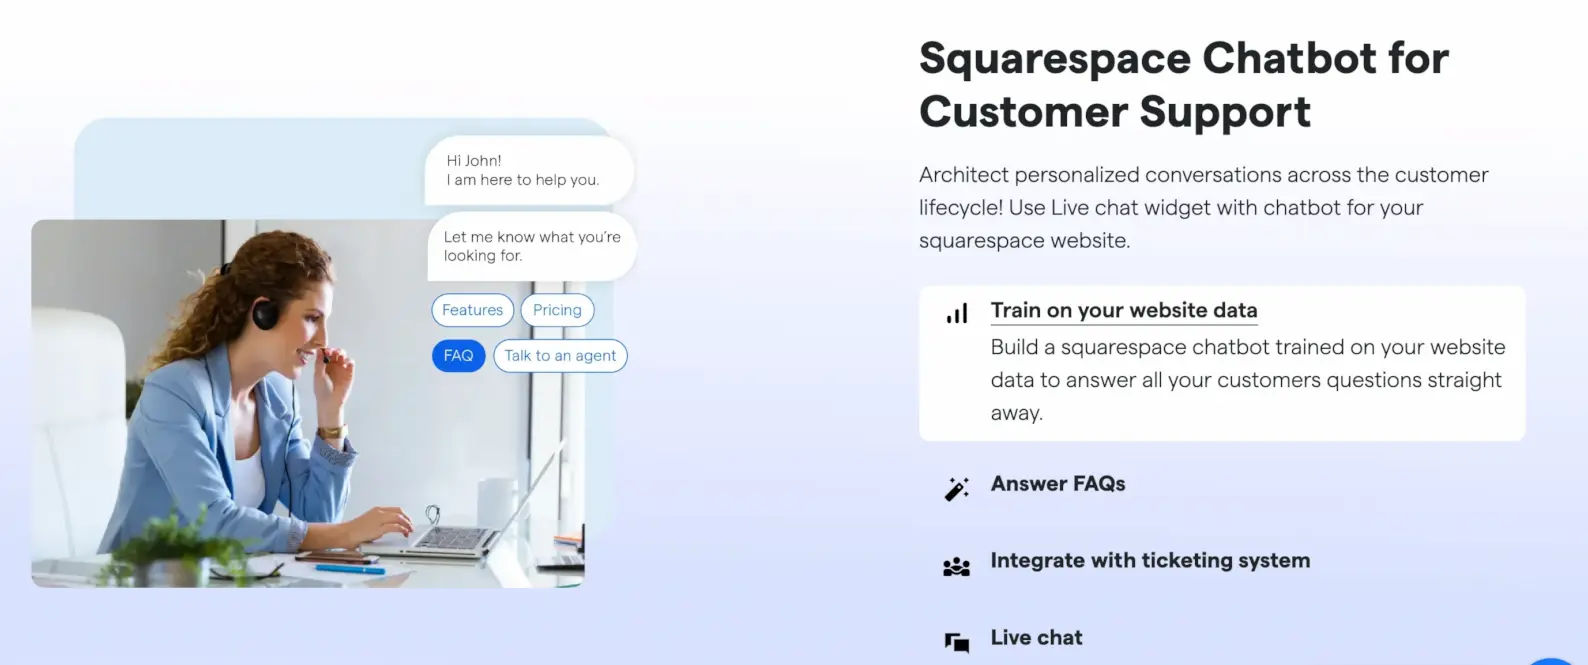 Squarespace Chatbot